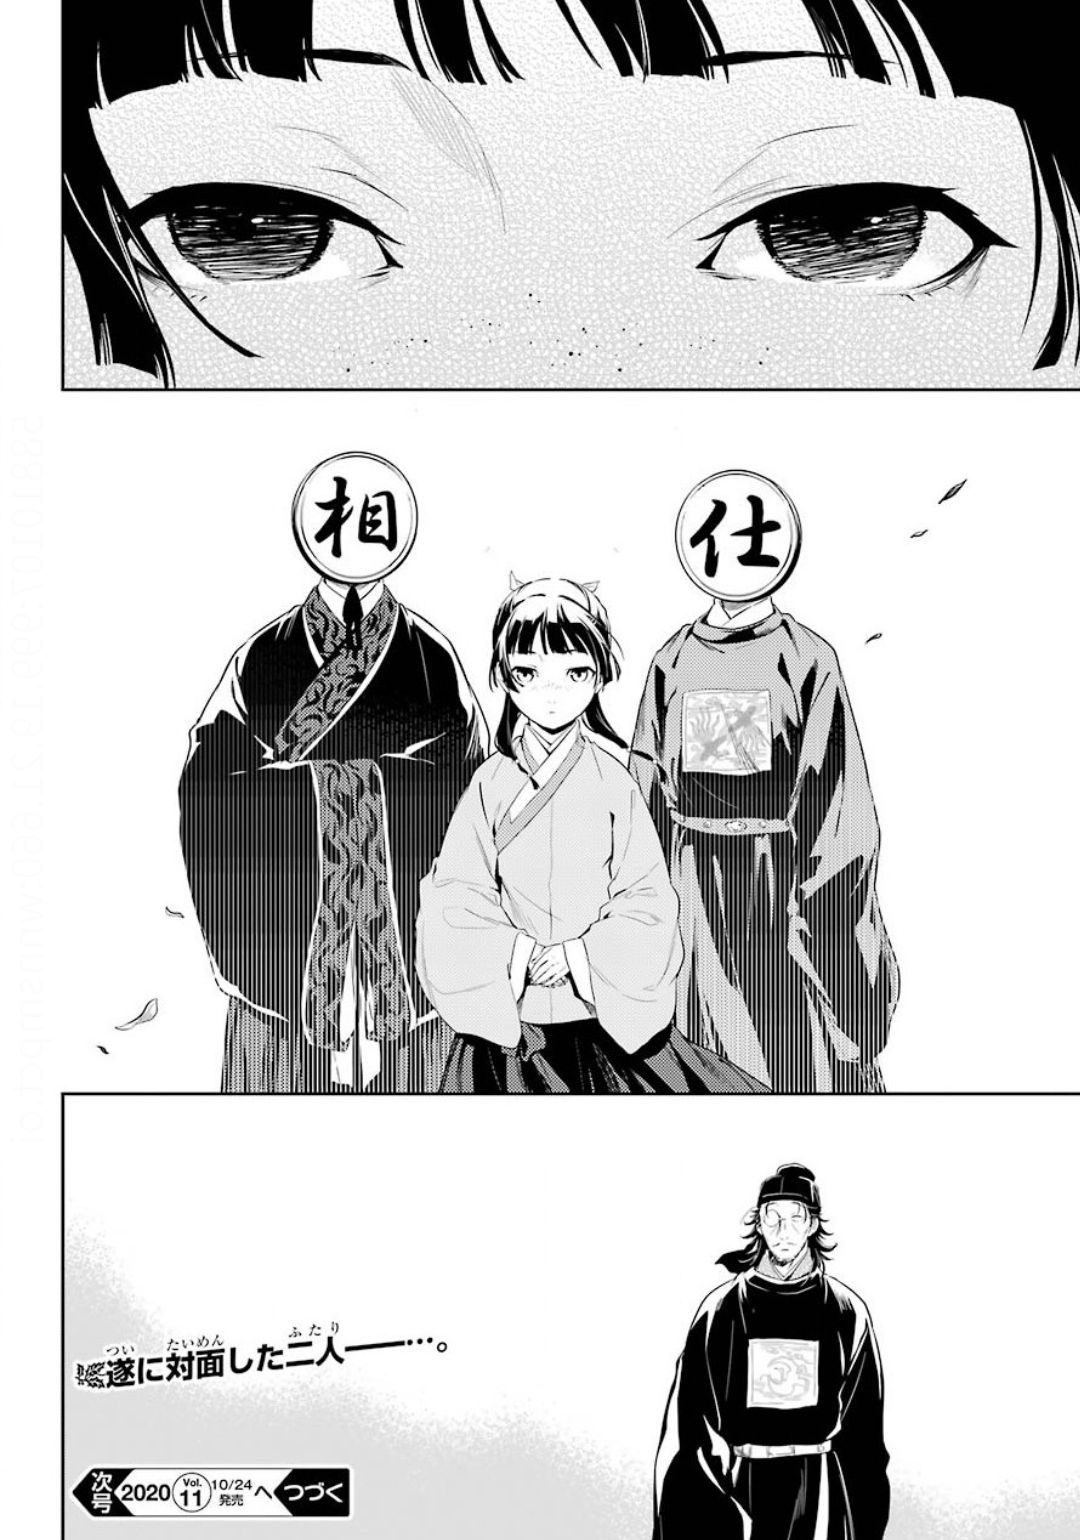 Kusuriya no Hitorigoto - Chapter 36-2 - Page 18